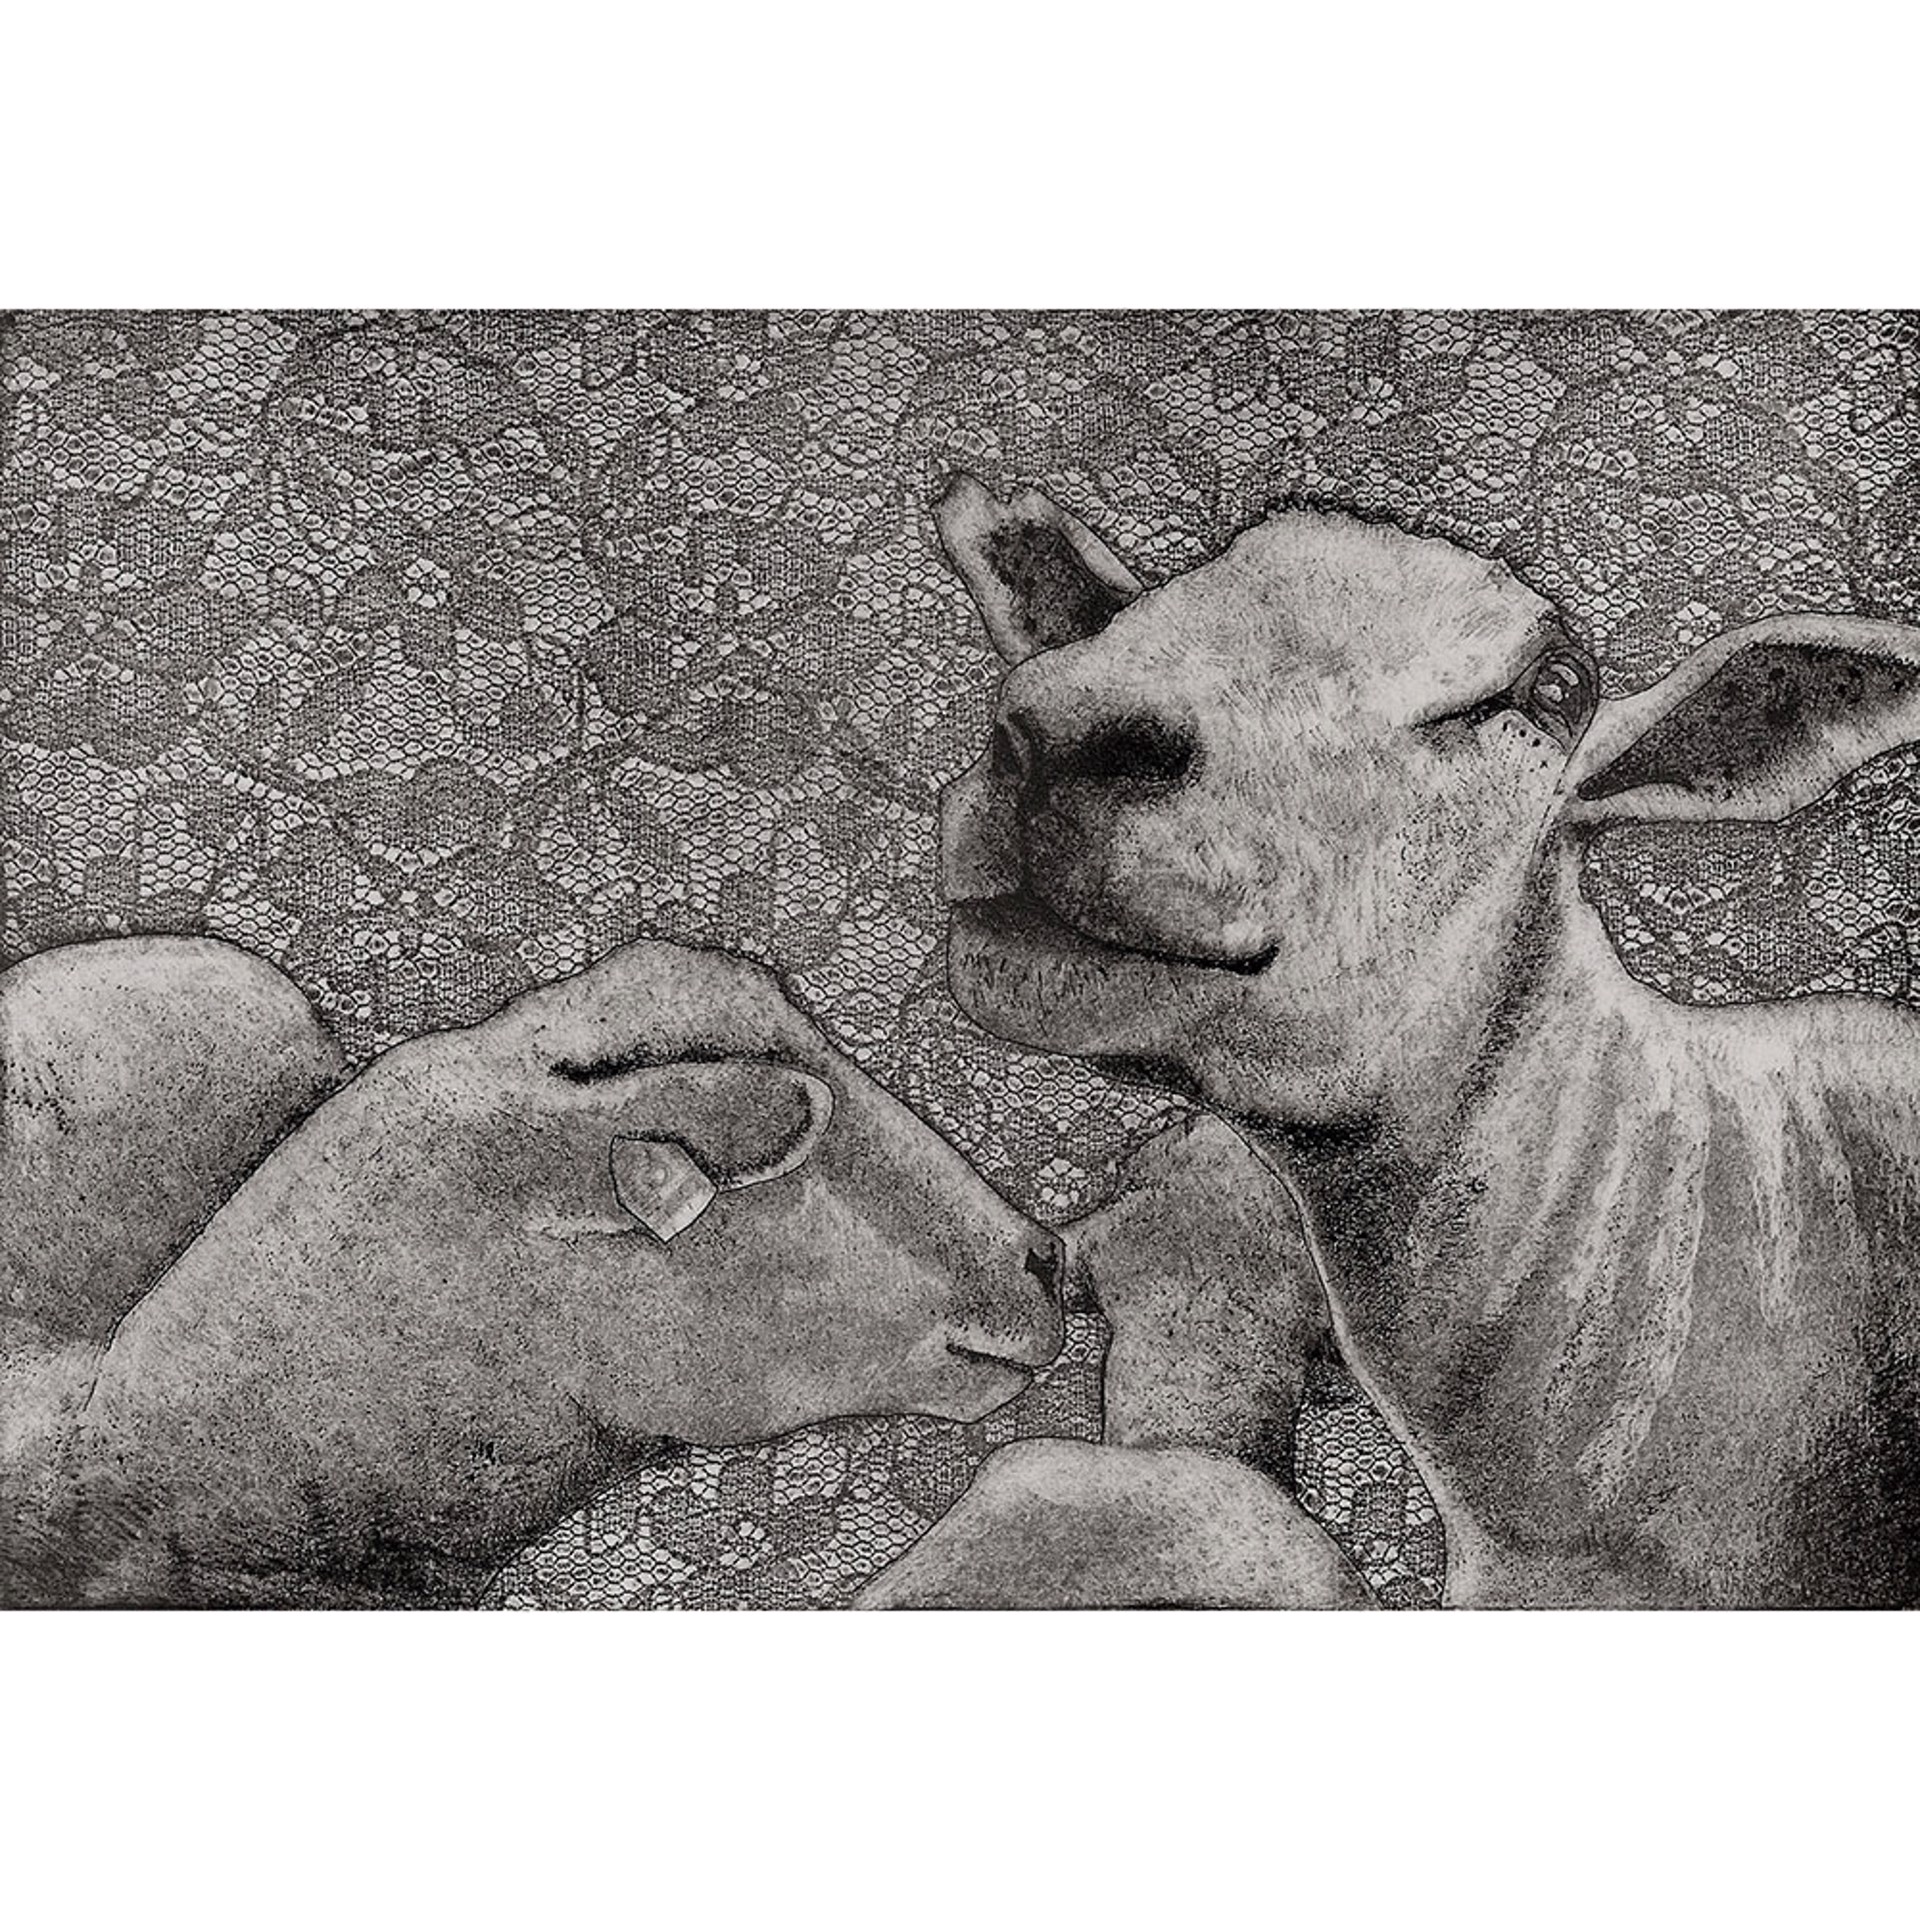 lamb stew by Patricia L. Giraud